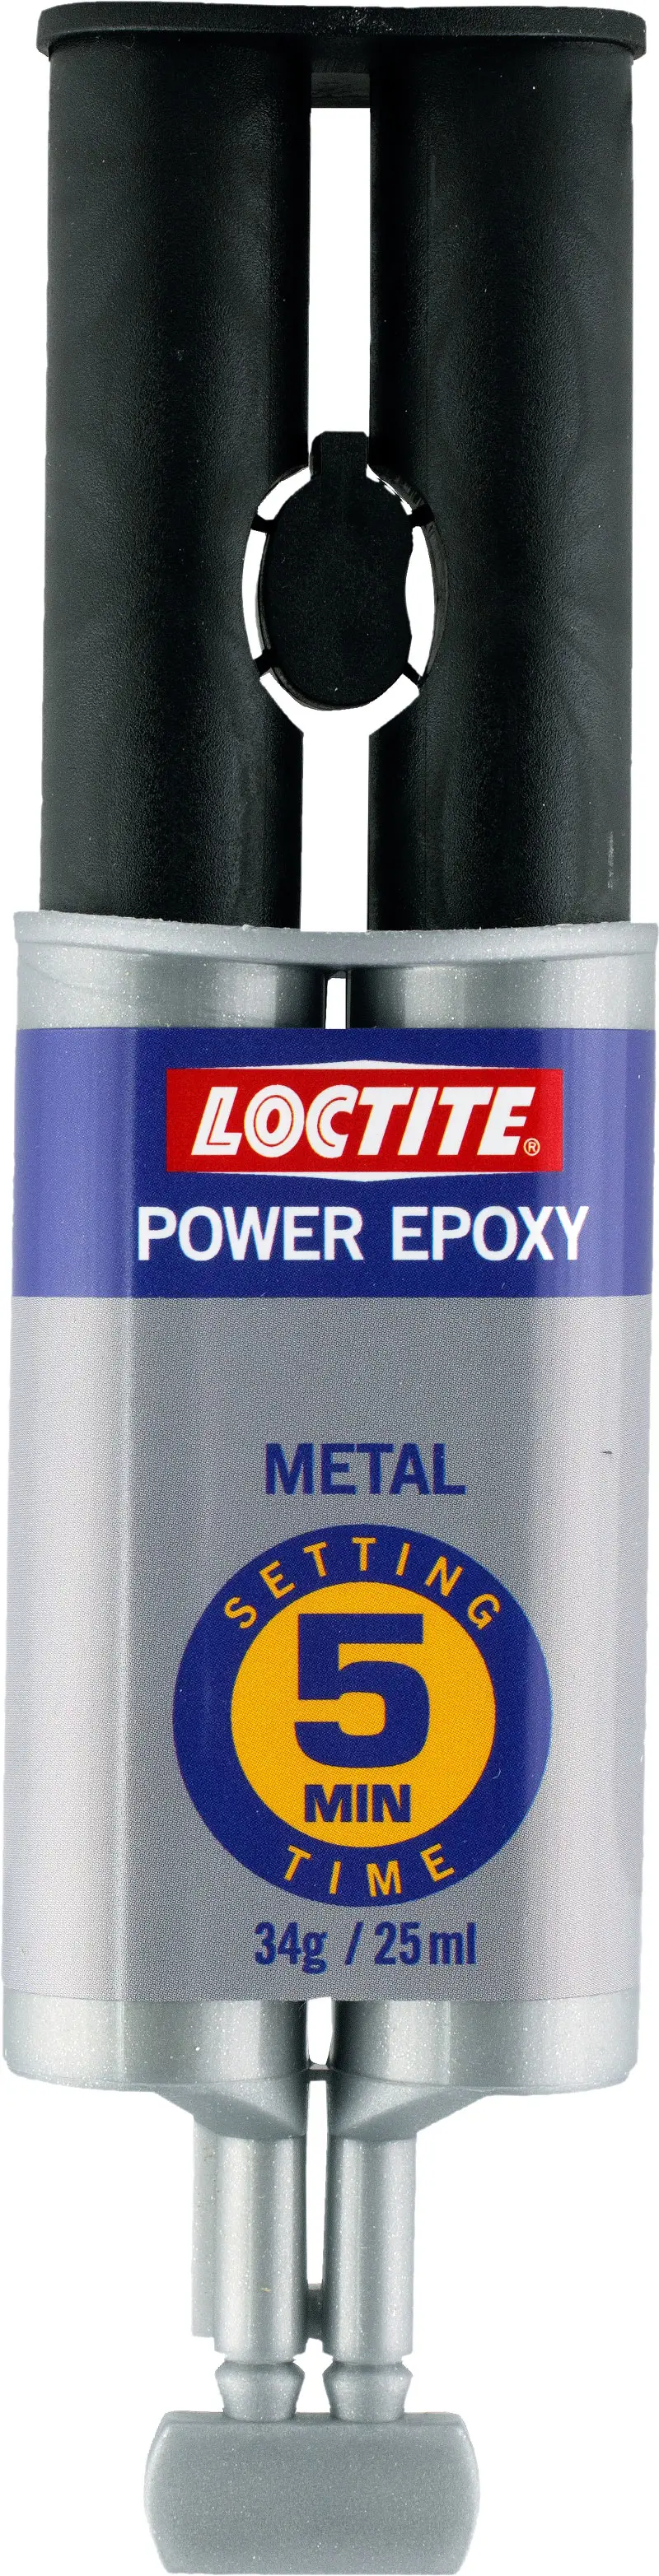 Loctite Superstål/Power Epoxi Metal